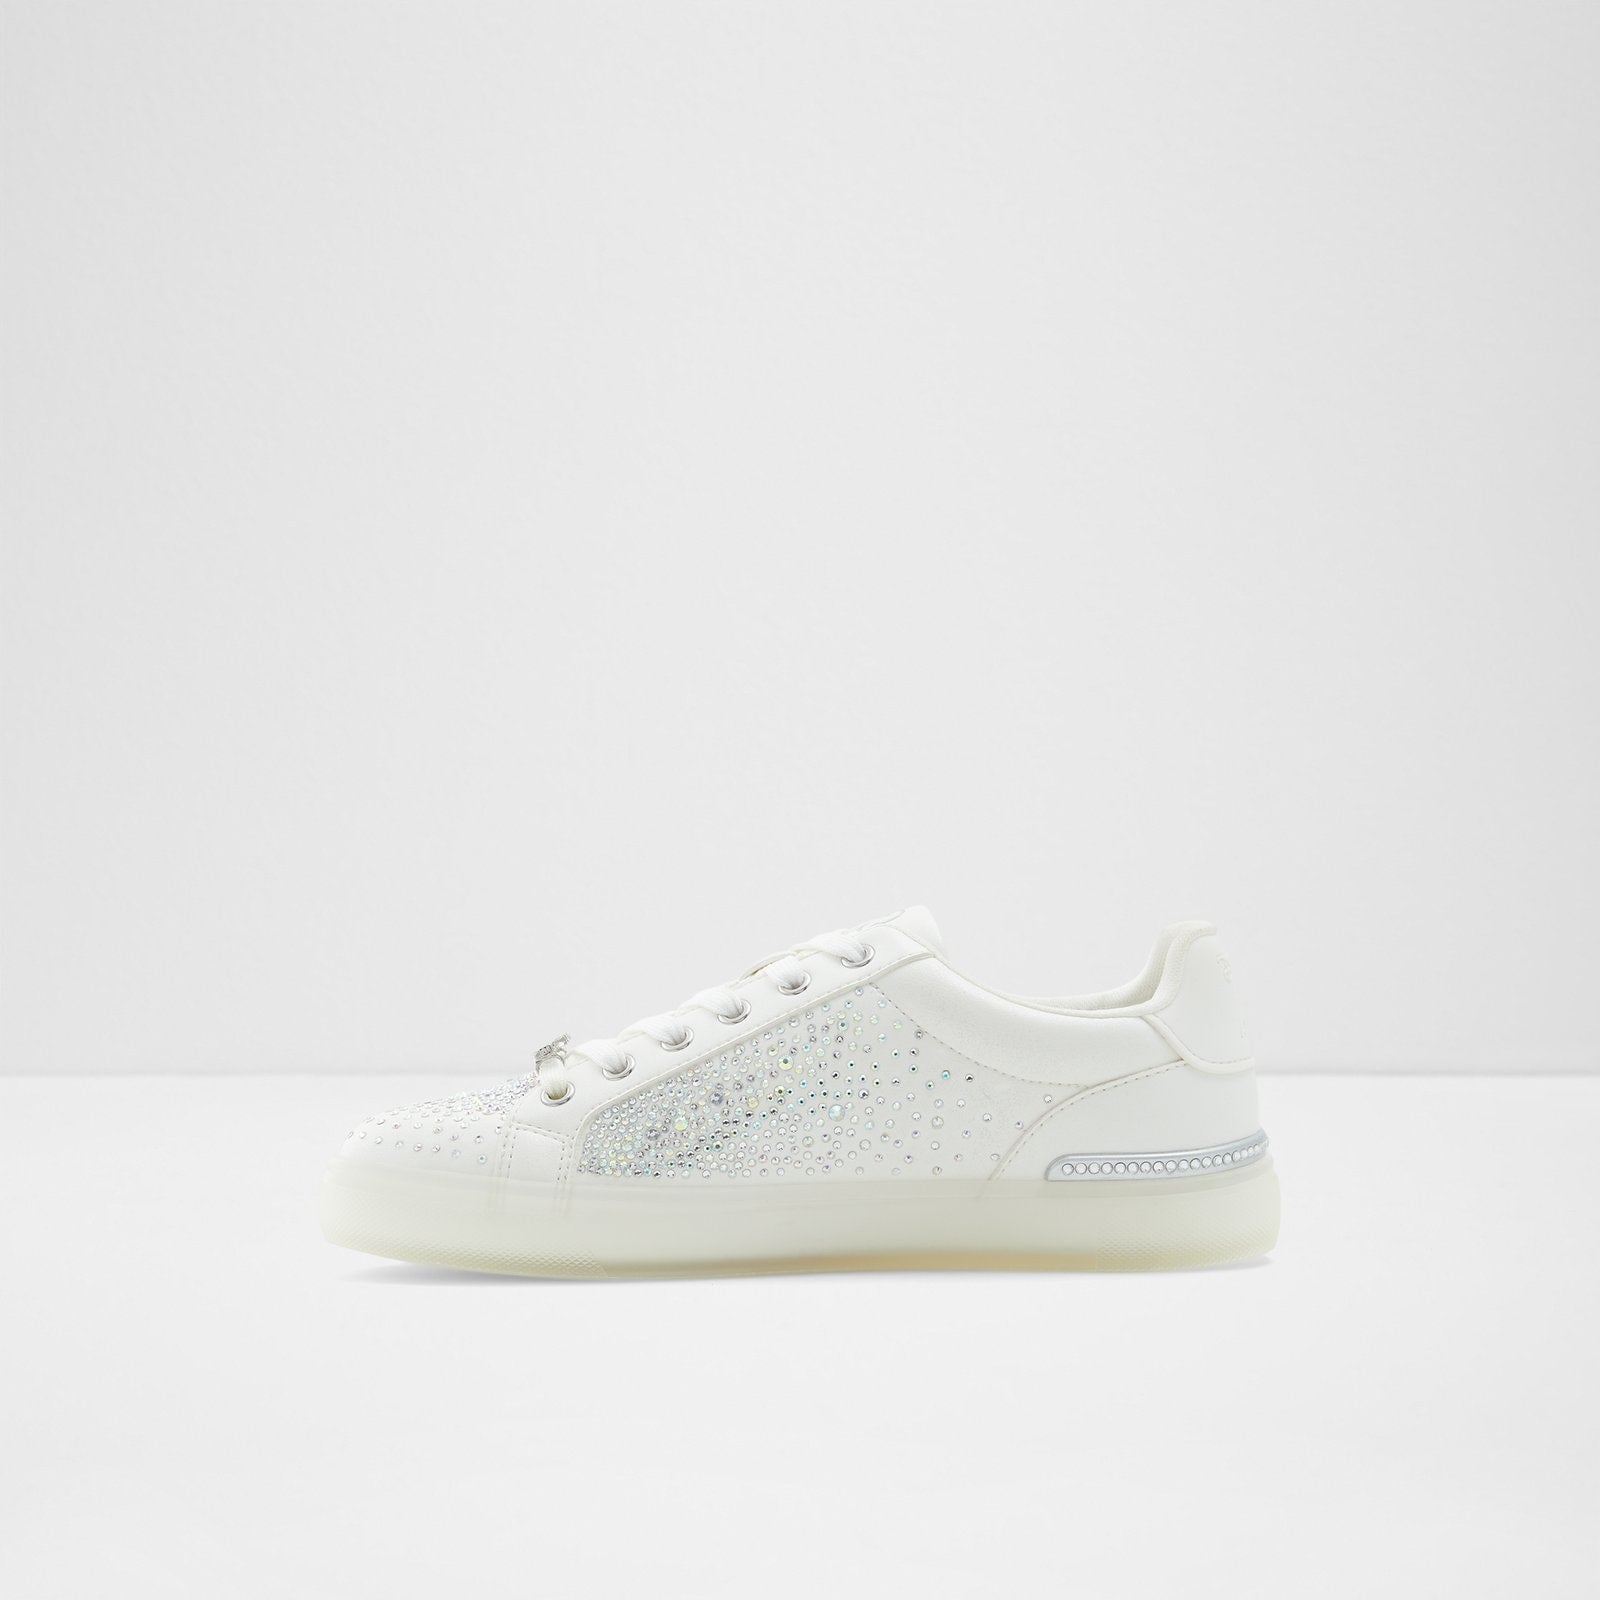 Glasssneaker Women Shoes - White - ALDO KSA